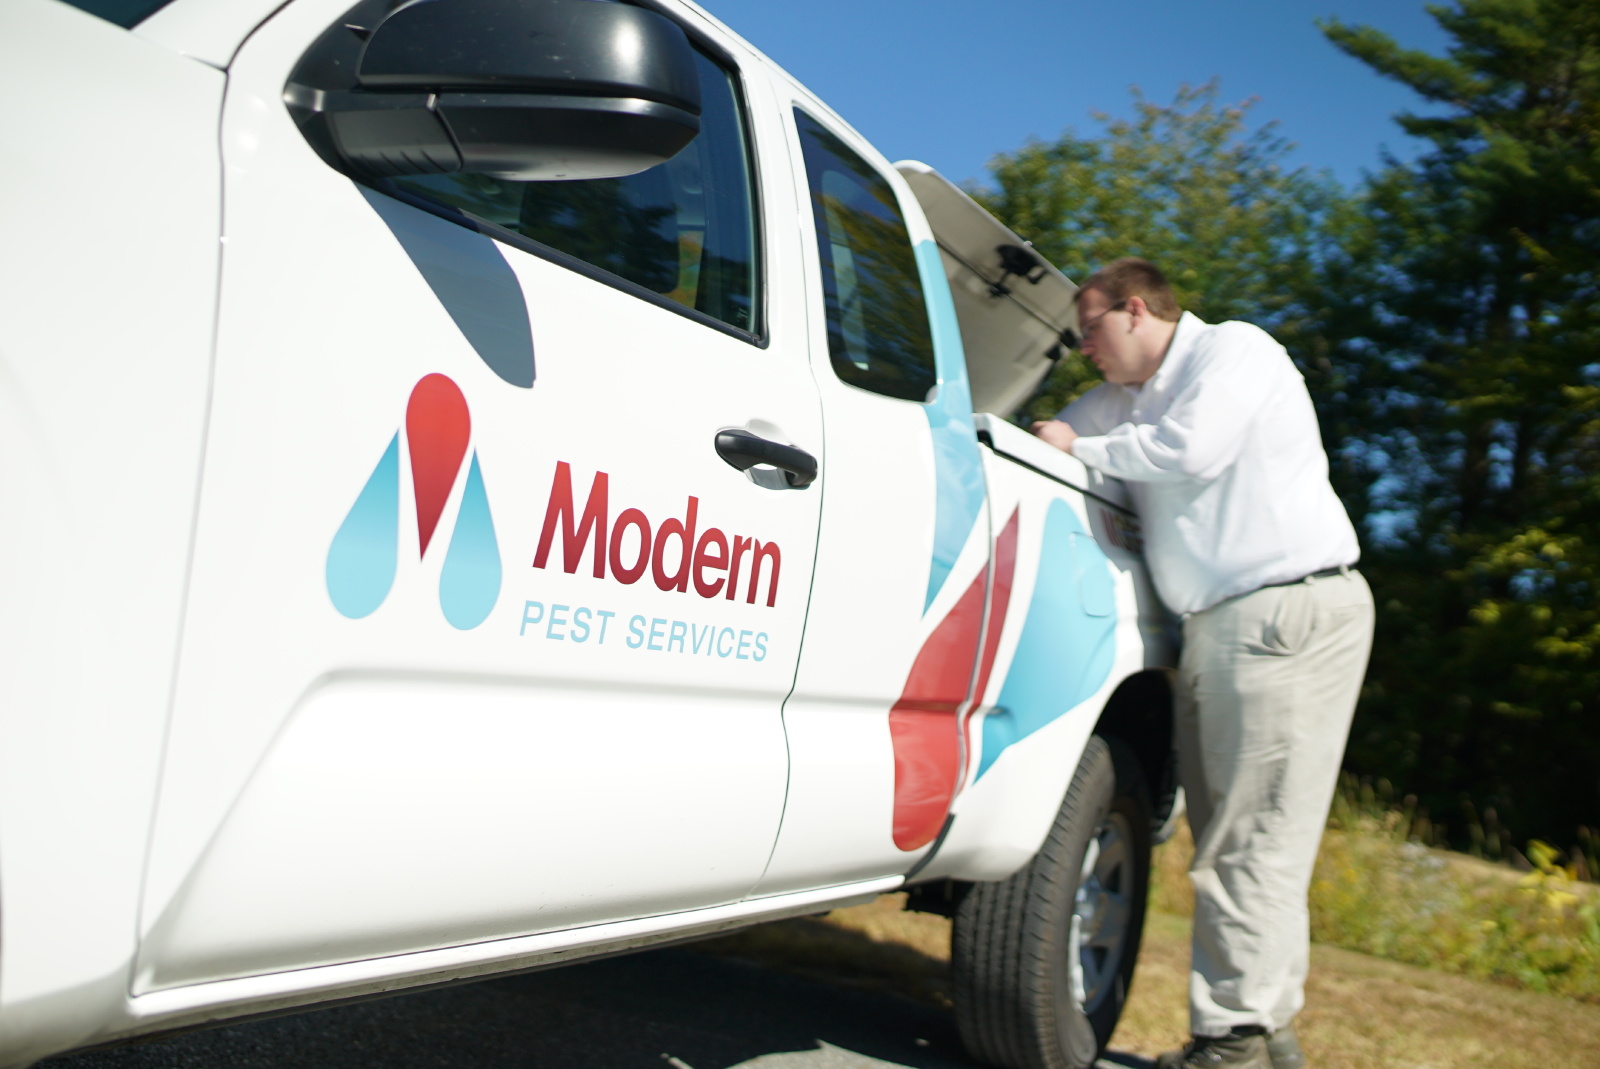 Modern Pest Services 187 East St, South Hadley Massachusetts 01075